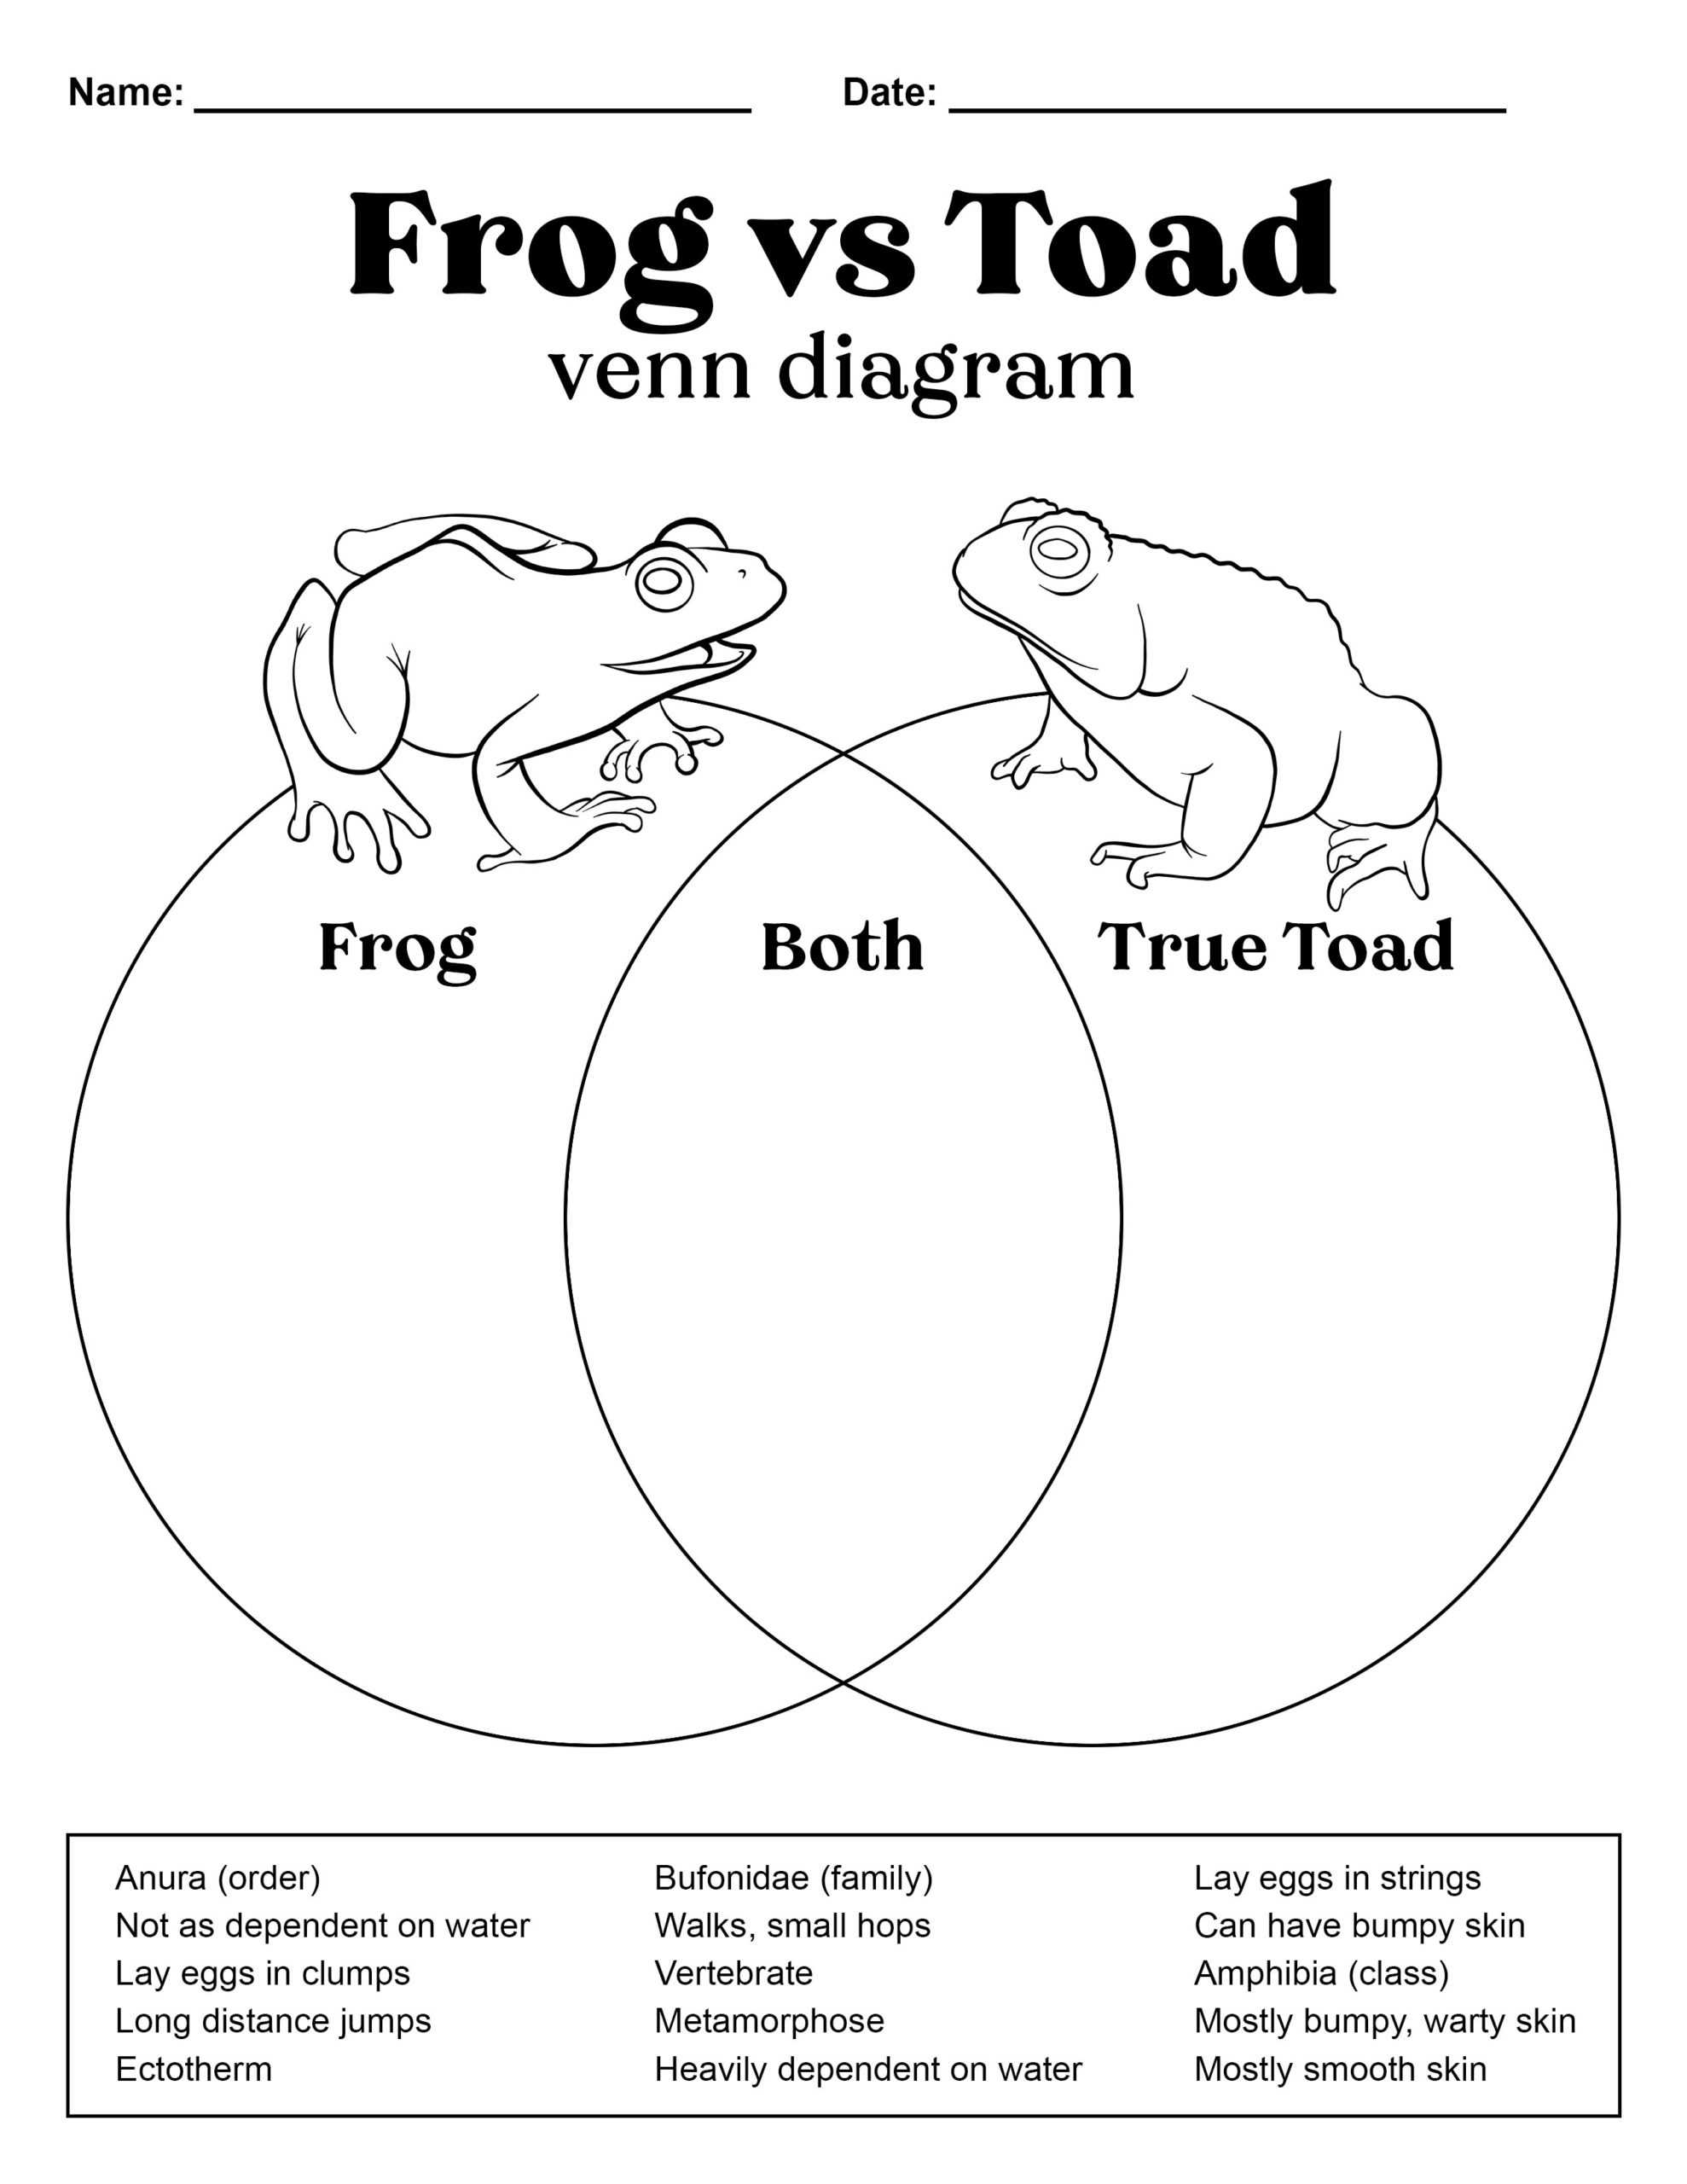 frog-vs-toad-venn-diagrams-for-kids-teens-mr-amphibian